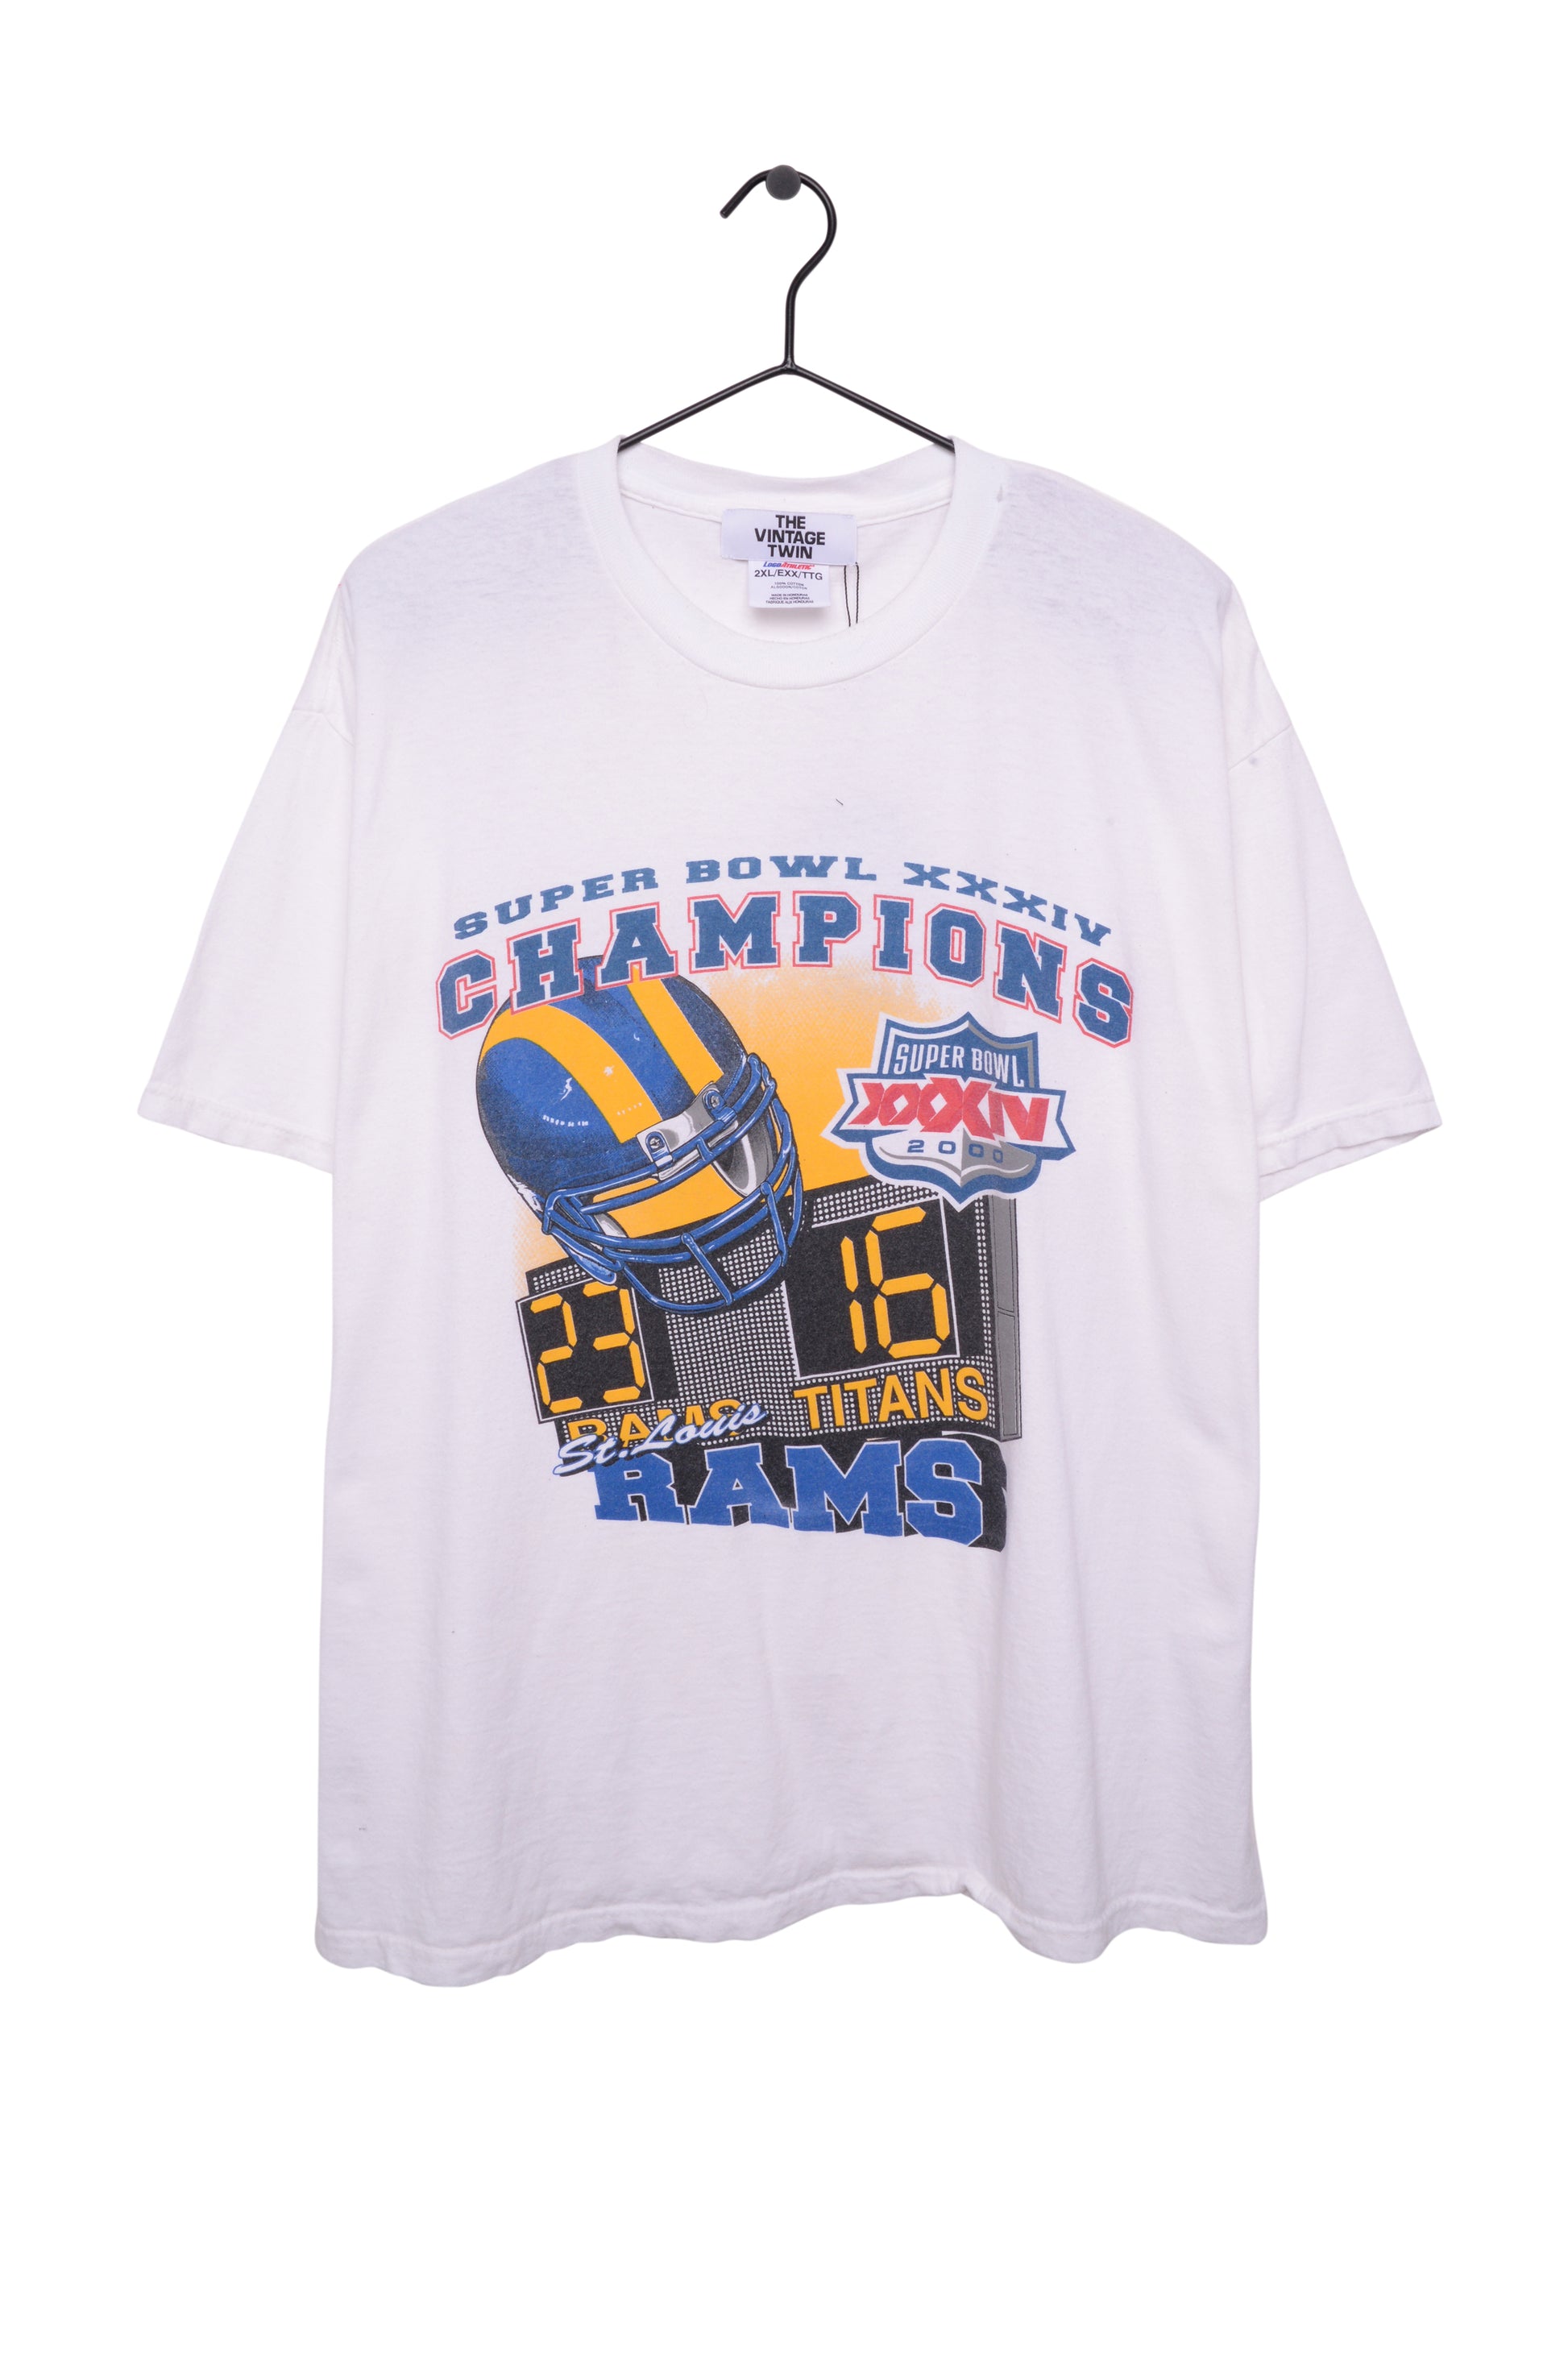 Vintage St Louis Rams Shirt Mens Large Blue Spell Out Logo NFL